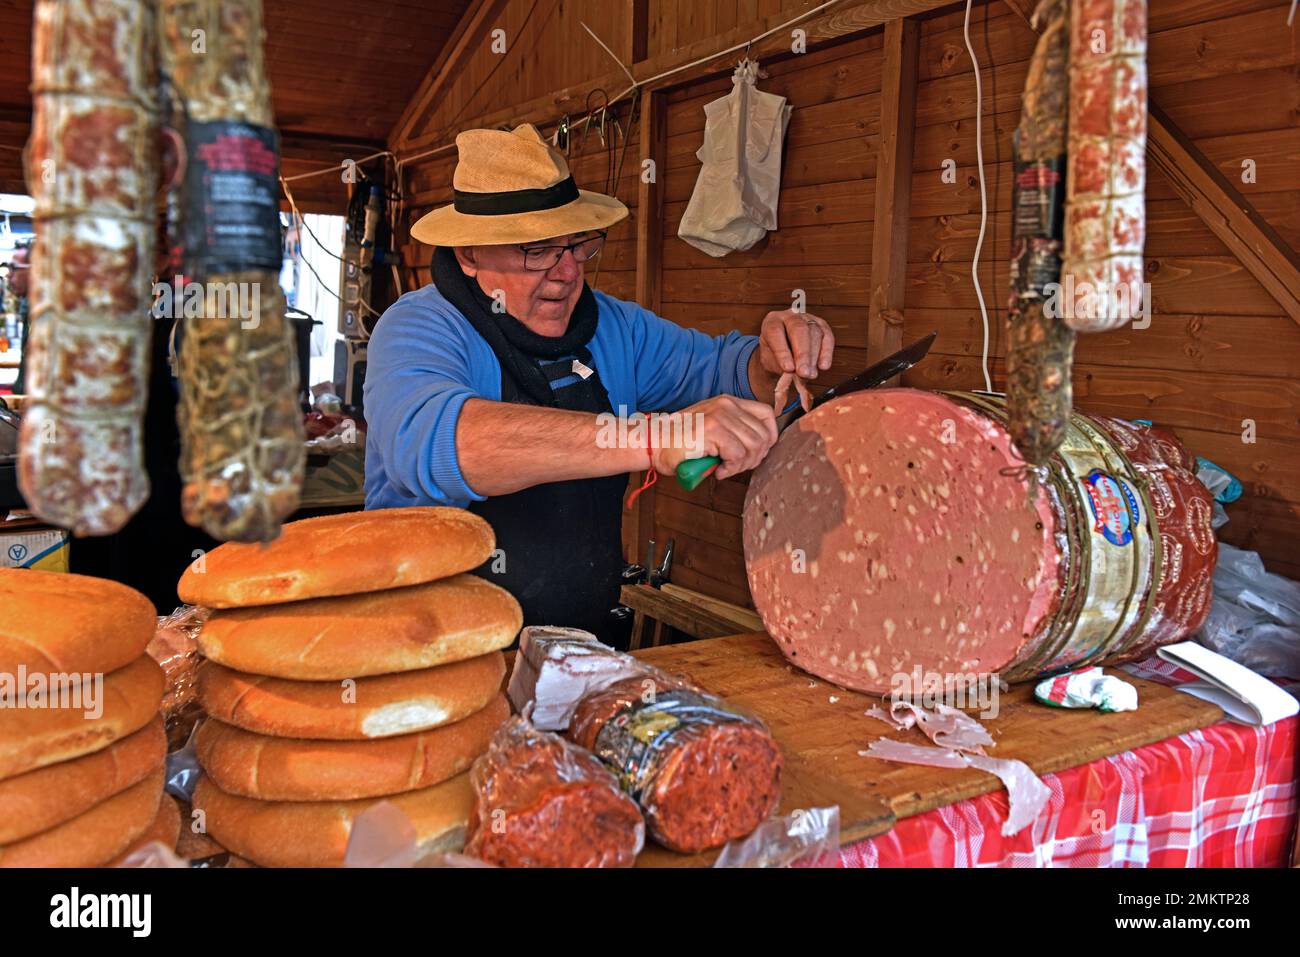 Shopman cuts a mortadella sausage Stock Photo